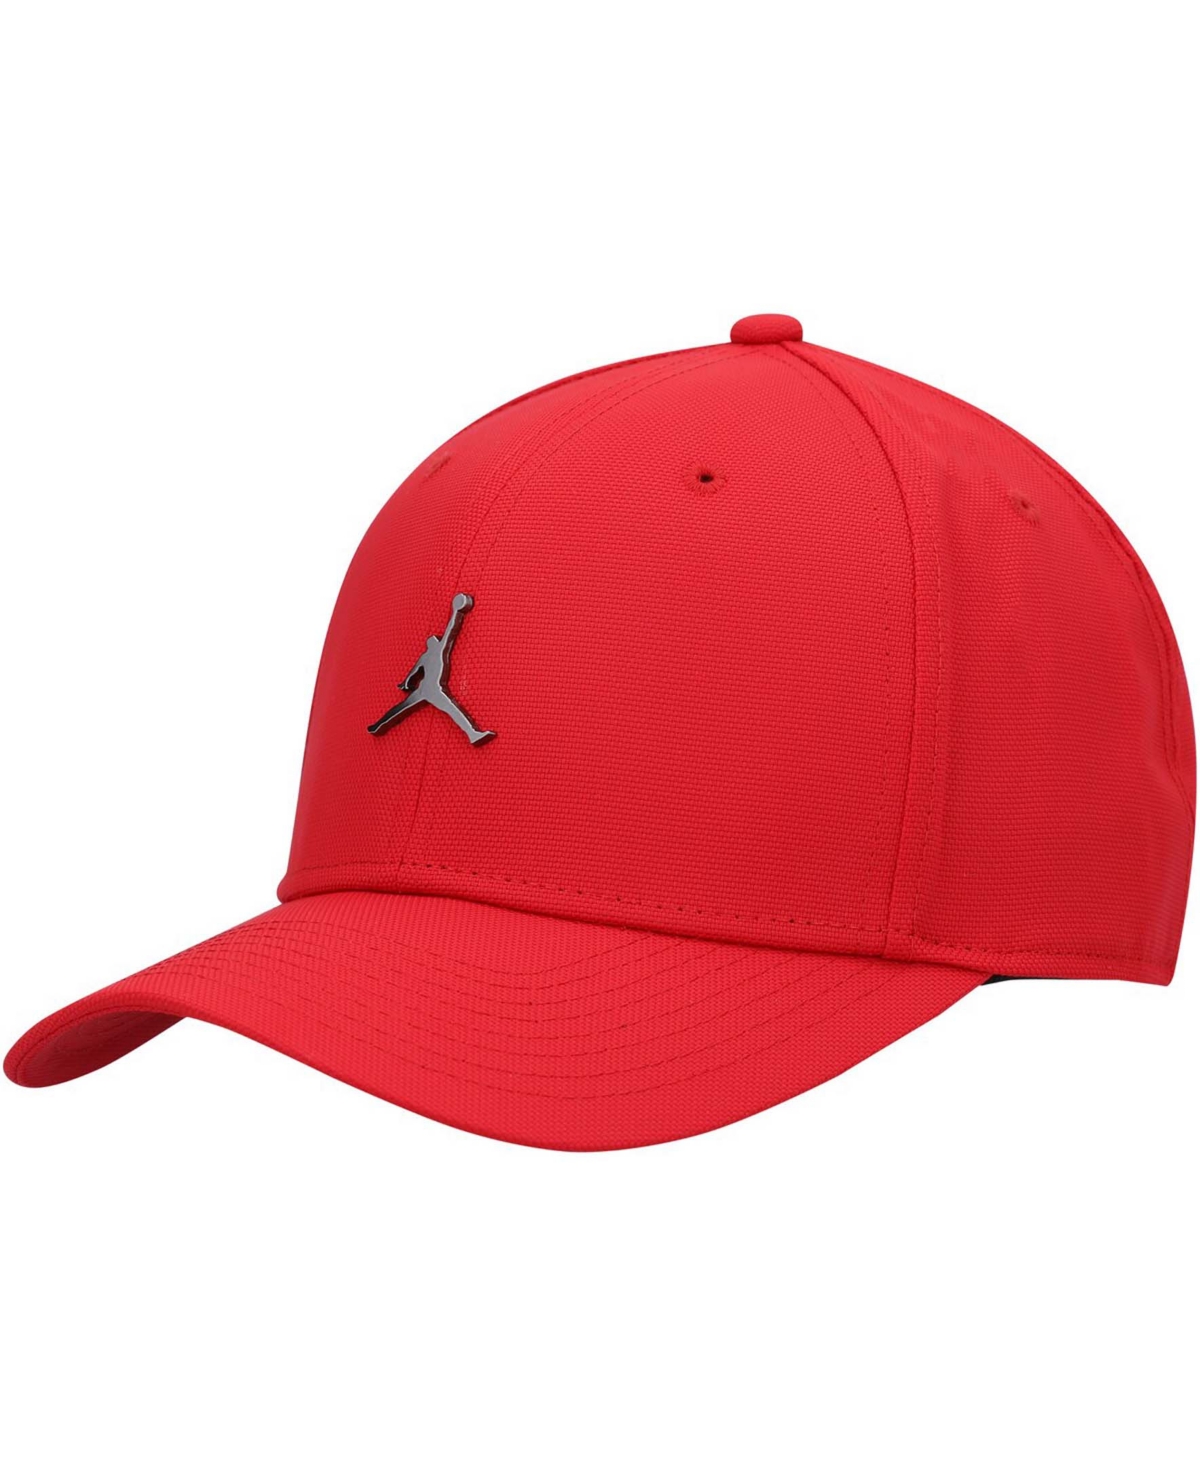 Metal Logo Adjustable Cap - Red